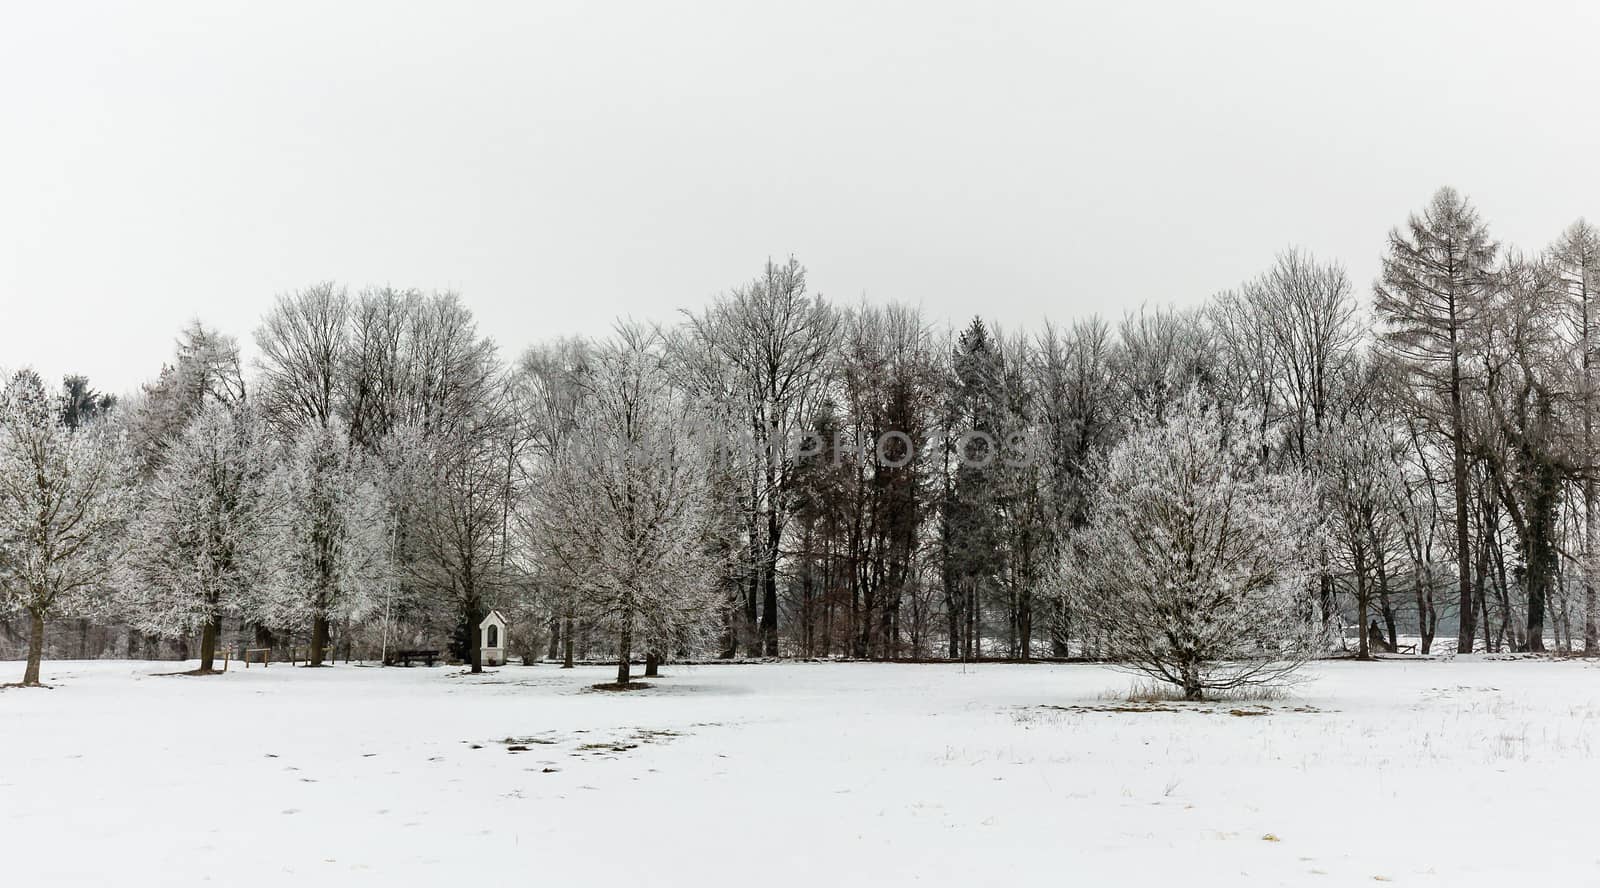 Wayside chapel winter trees by maxlindna